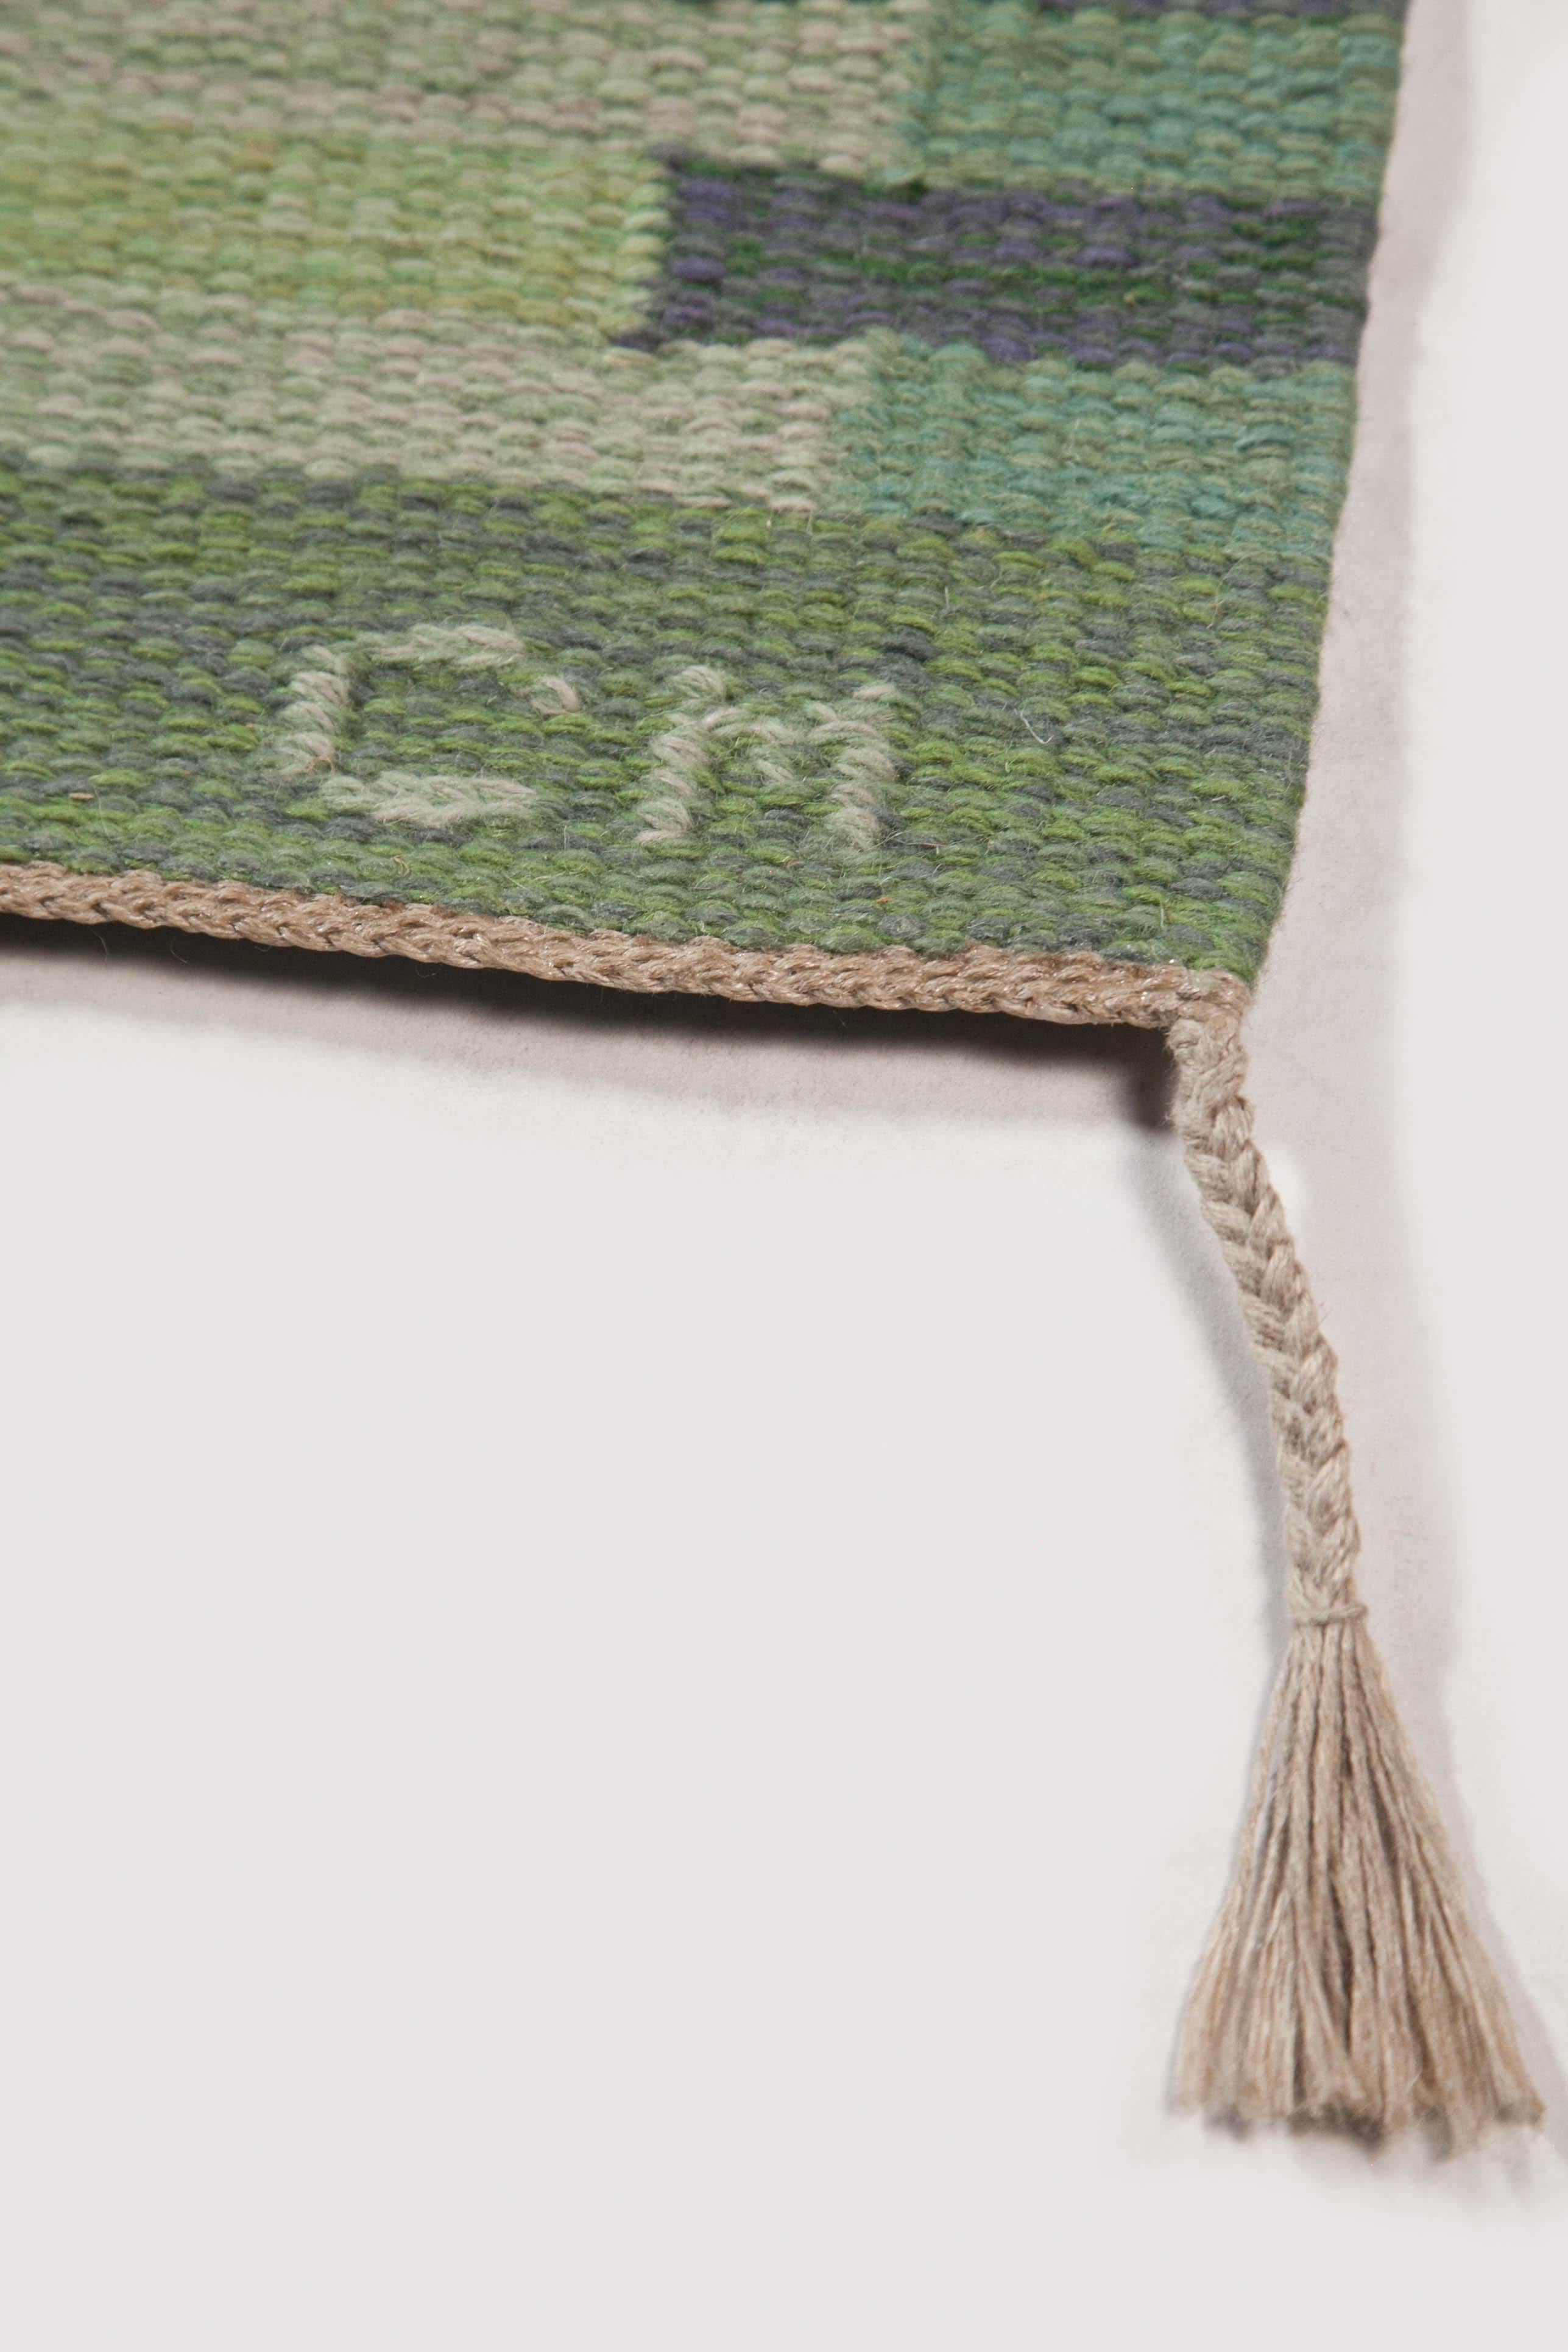 Scandinavian Modern Carl Malmsten Swedish Flat Weave “Capellagården” Runner, Sweden 1960's For Sale